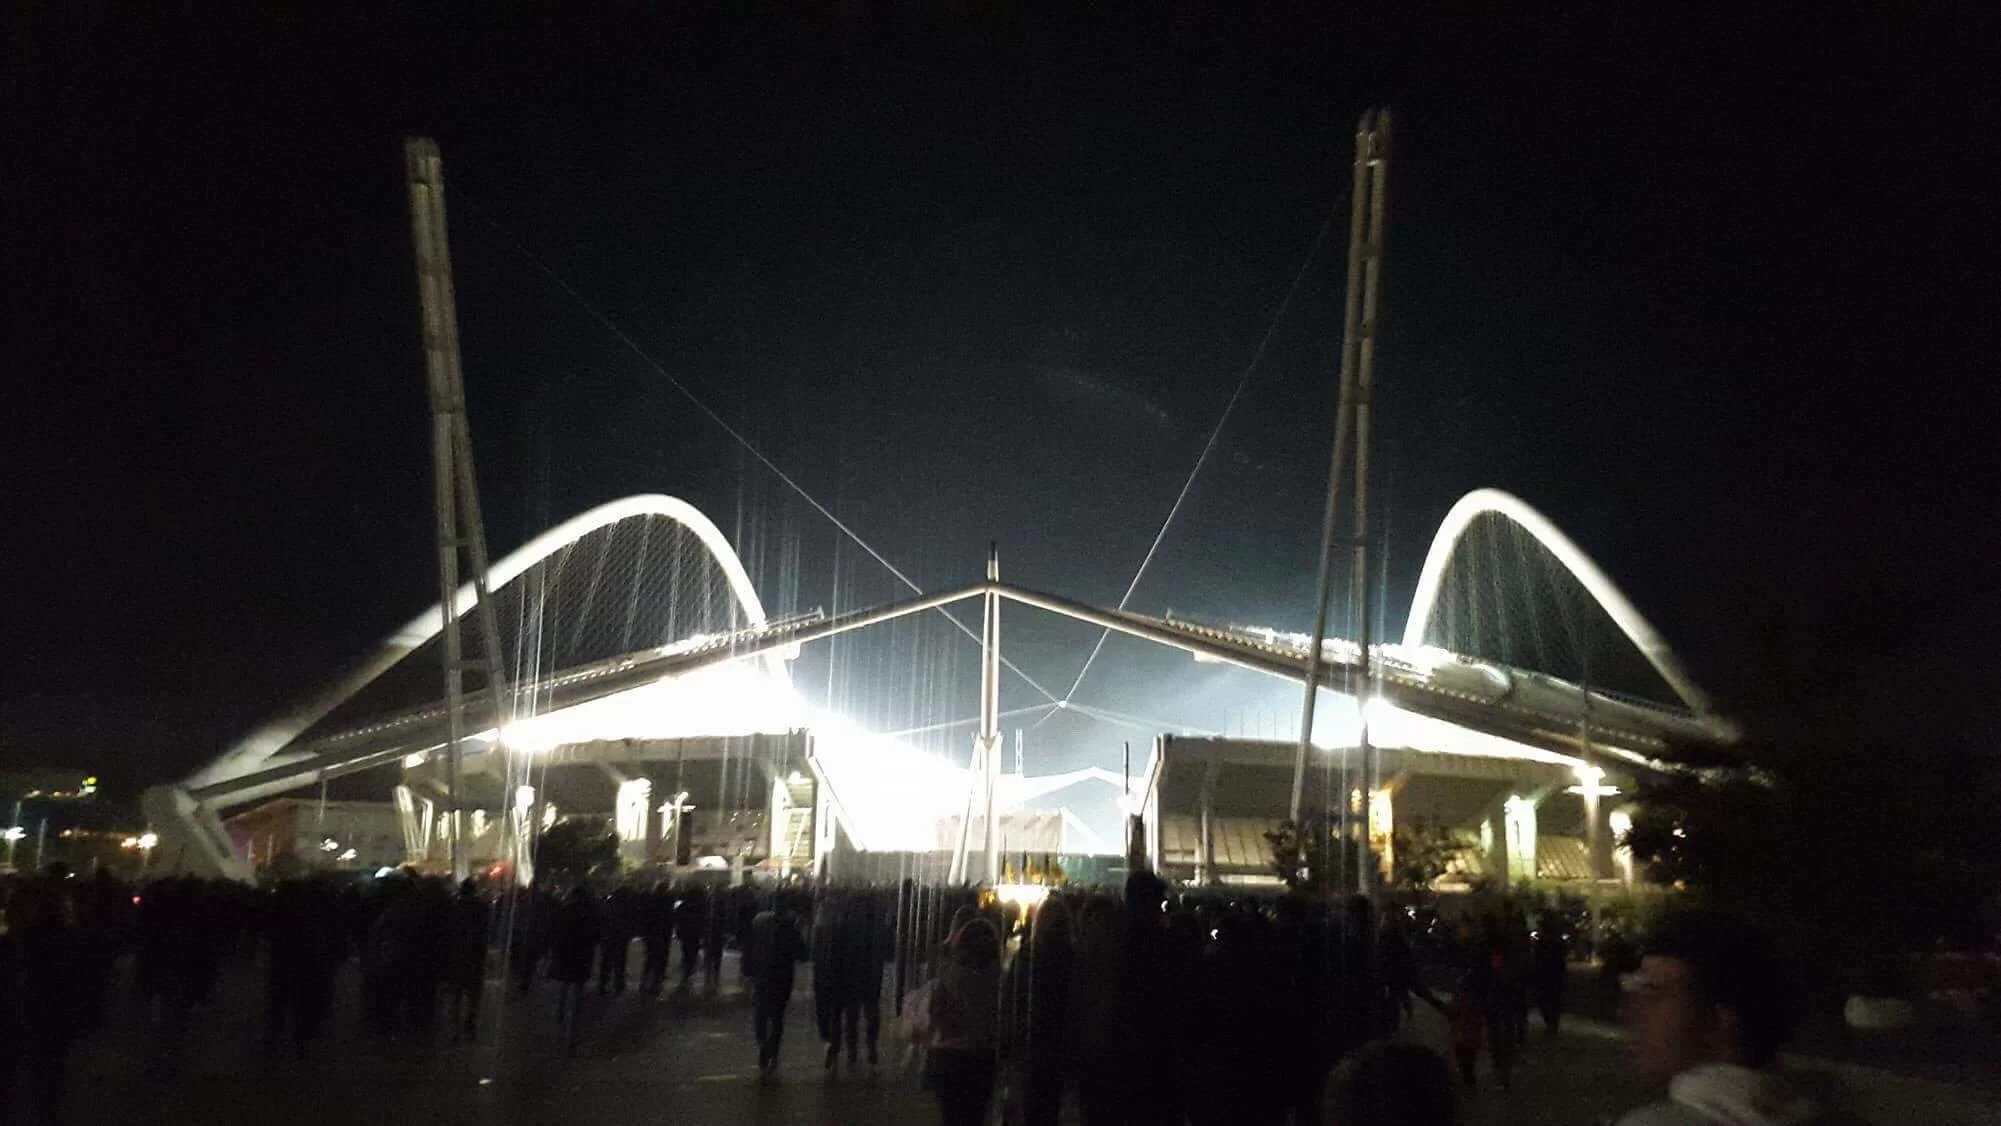 SM FOTO/ Folla all’esterno dello Stadio olimpico Spyros Louīs per AEK-Milan